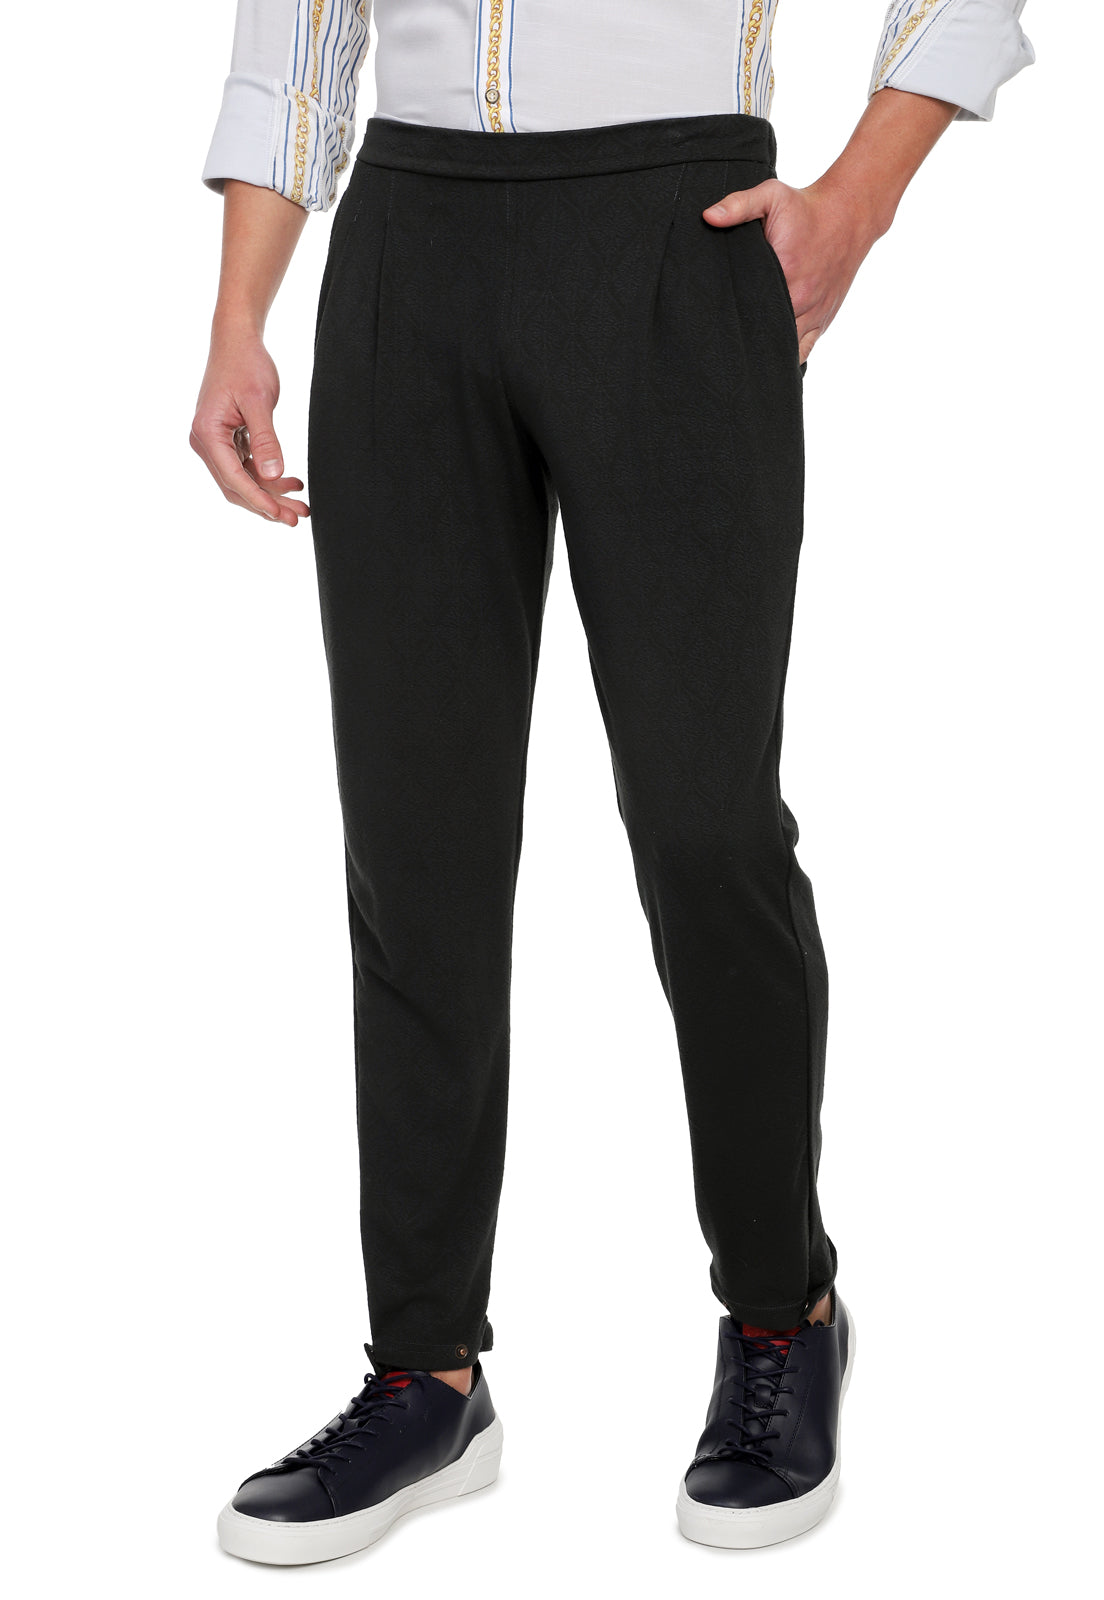 Pantalon Jogger Hombre Casual Alta Calidad Moda - $ 298